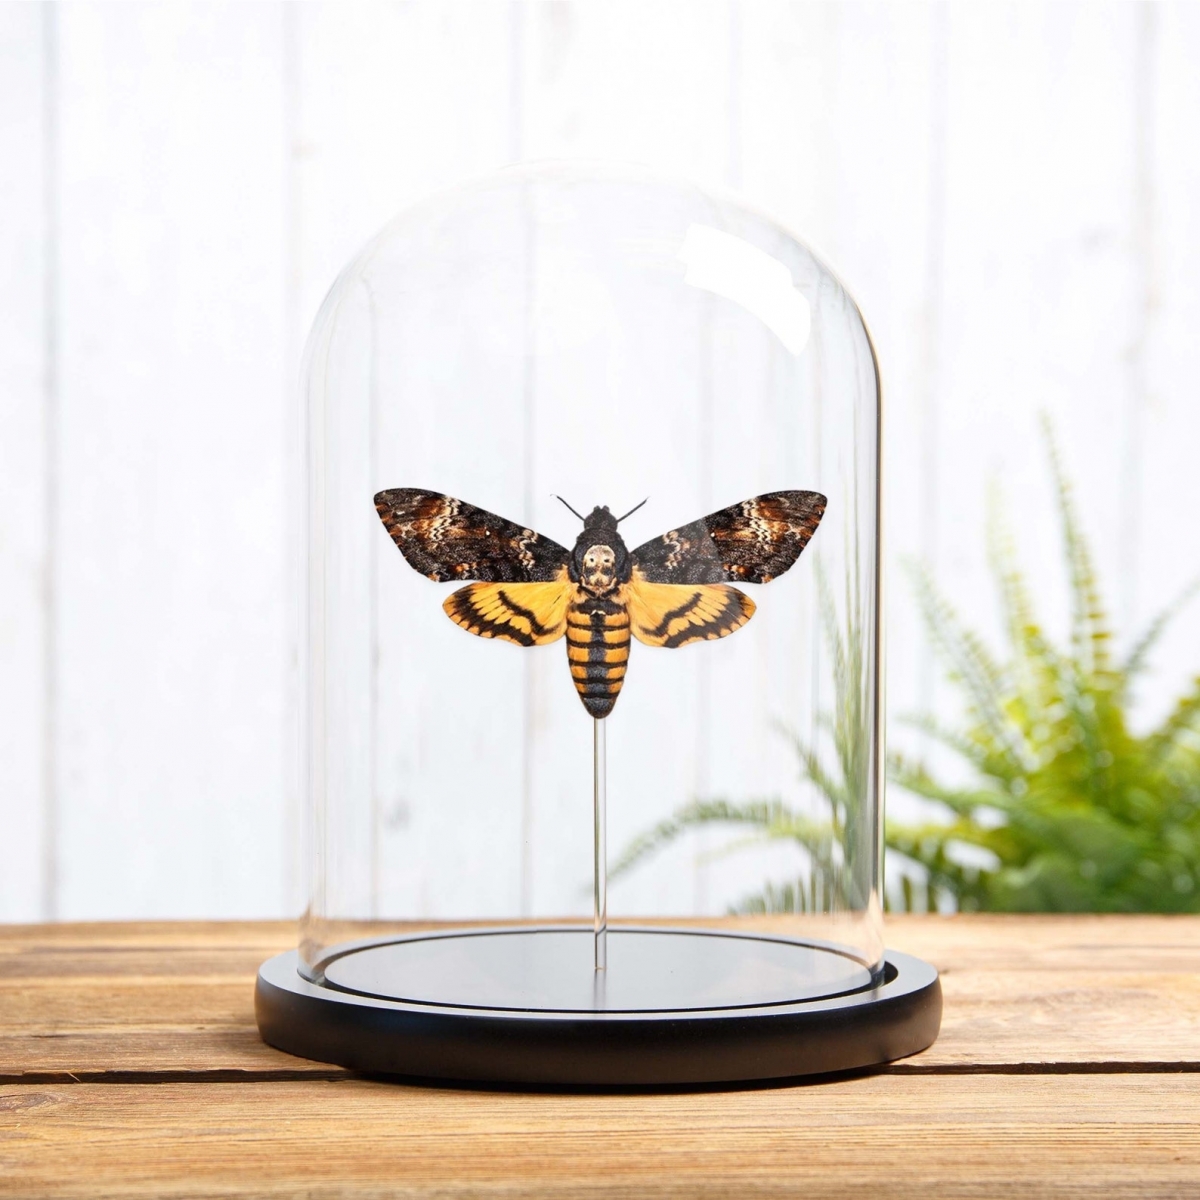 Minibeast Death's Head Hawk Moth in Glass Dome with Wooden Base (Acherontia atropos)